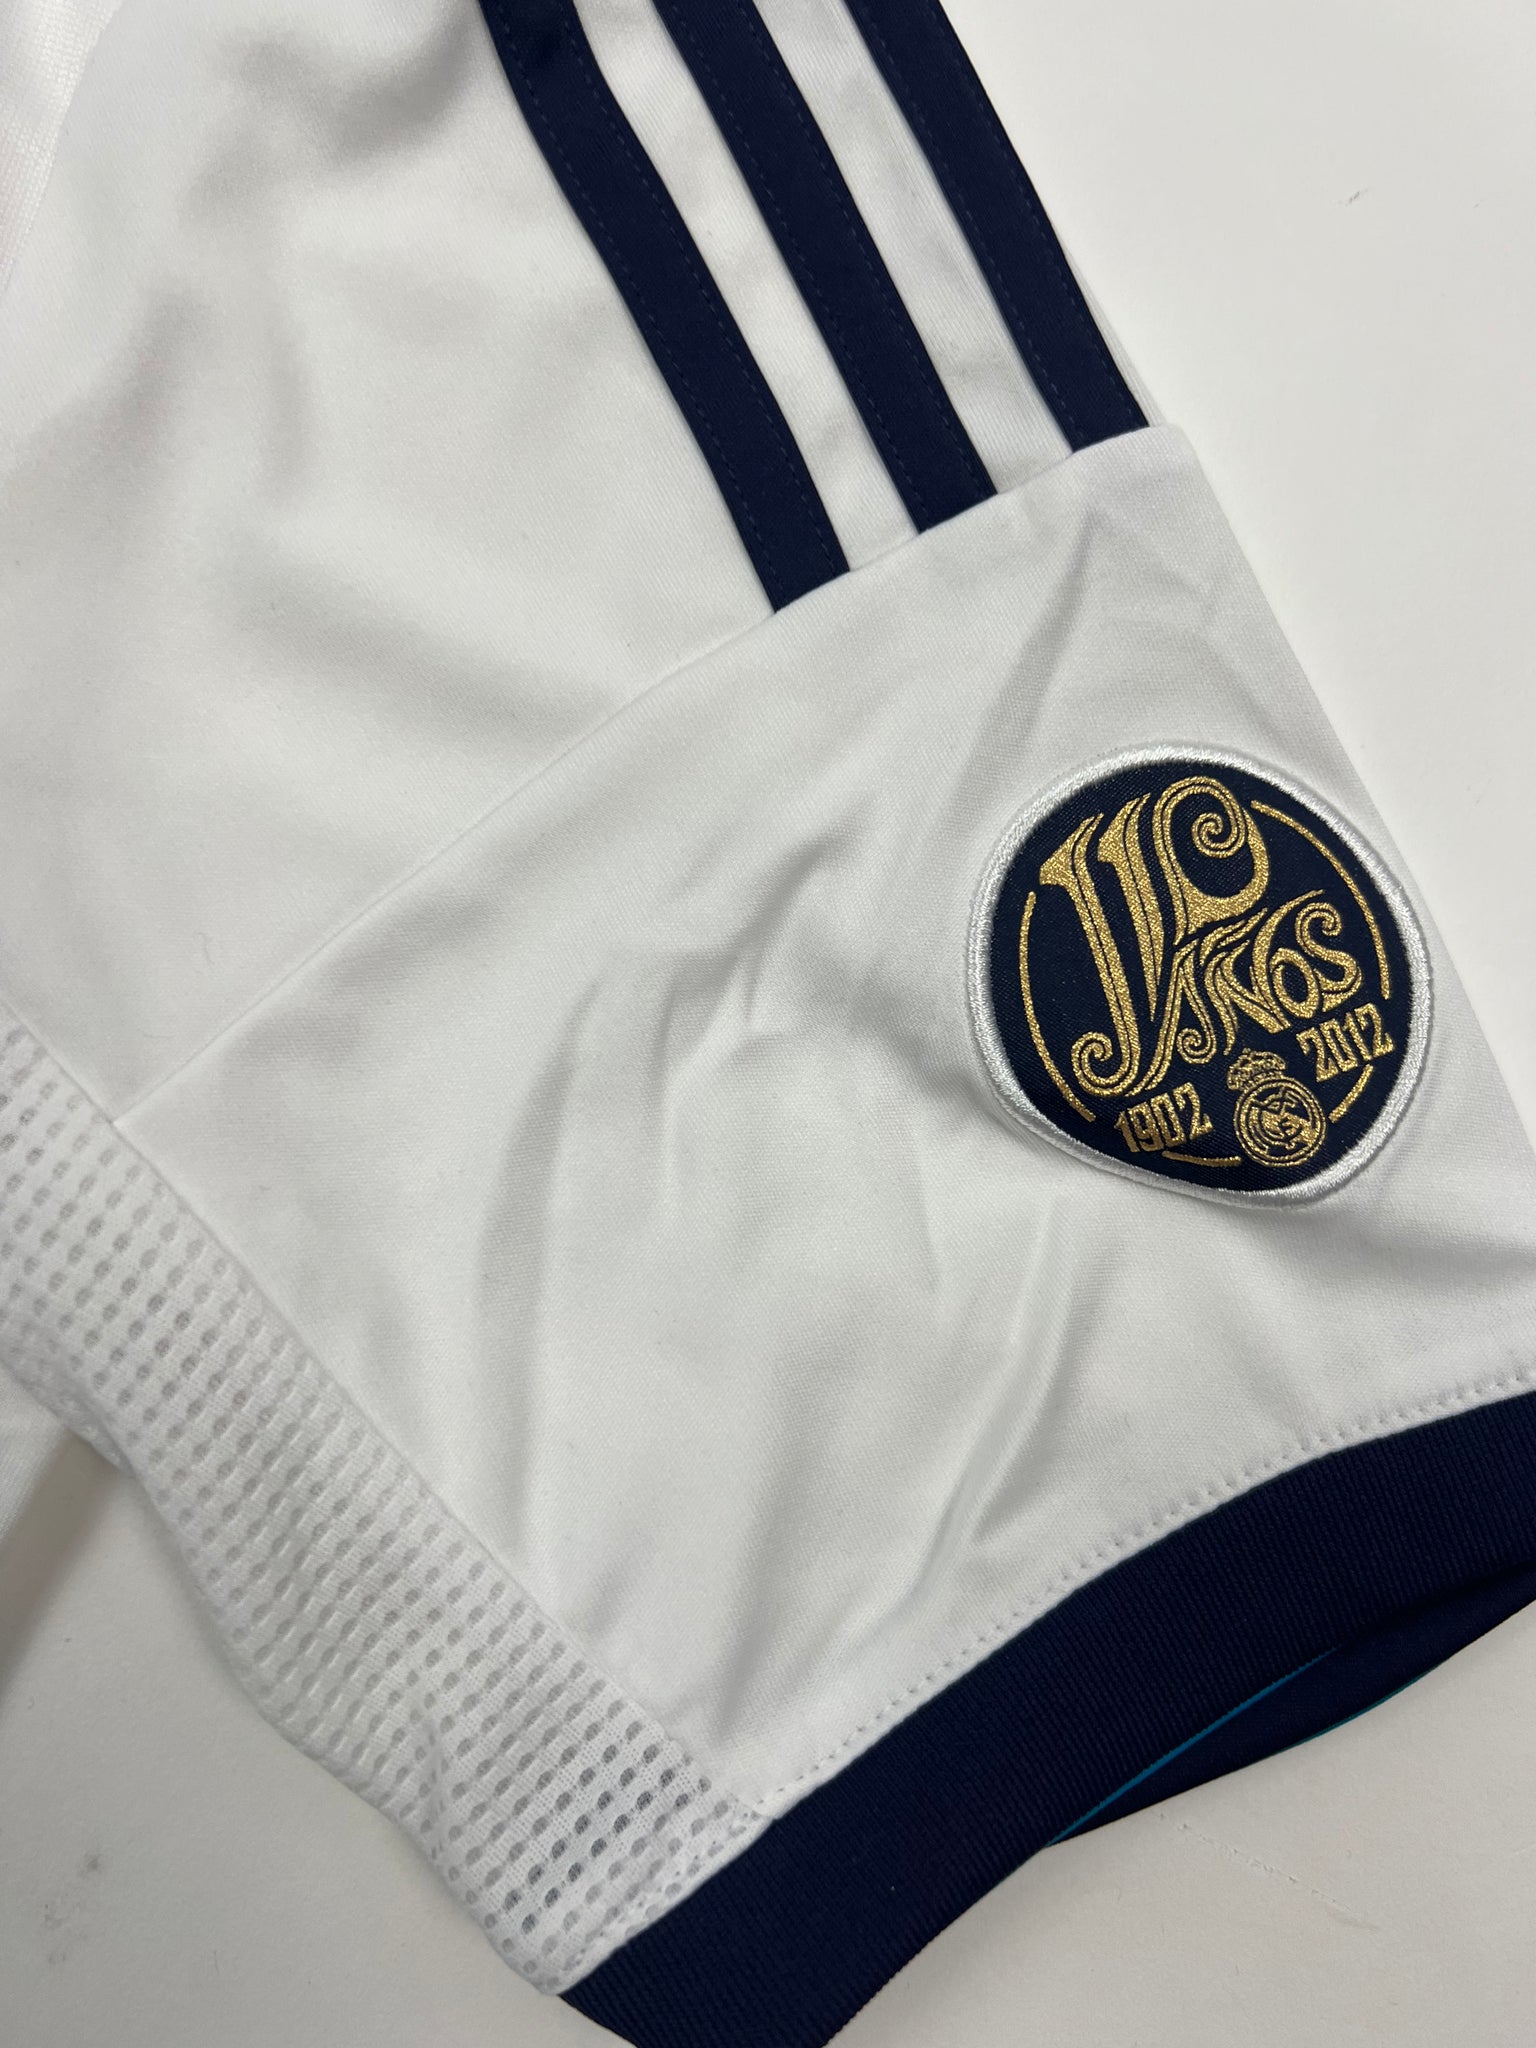 Adidas Real Madrid Jersey (S)